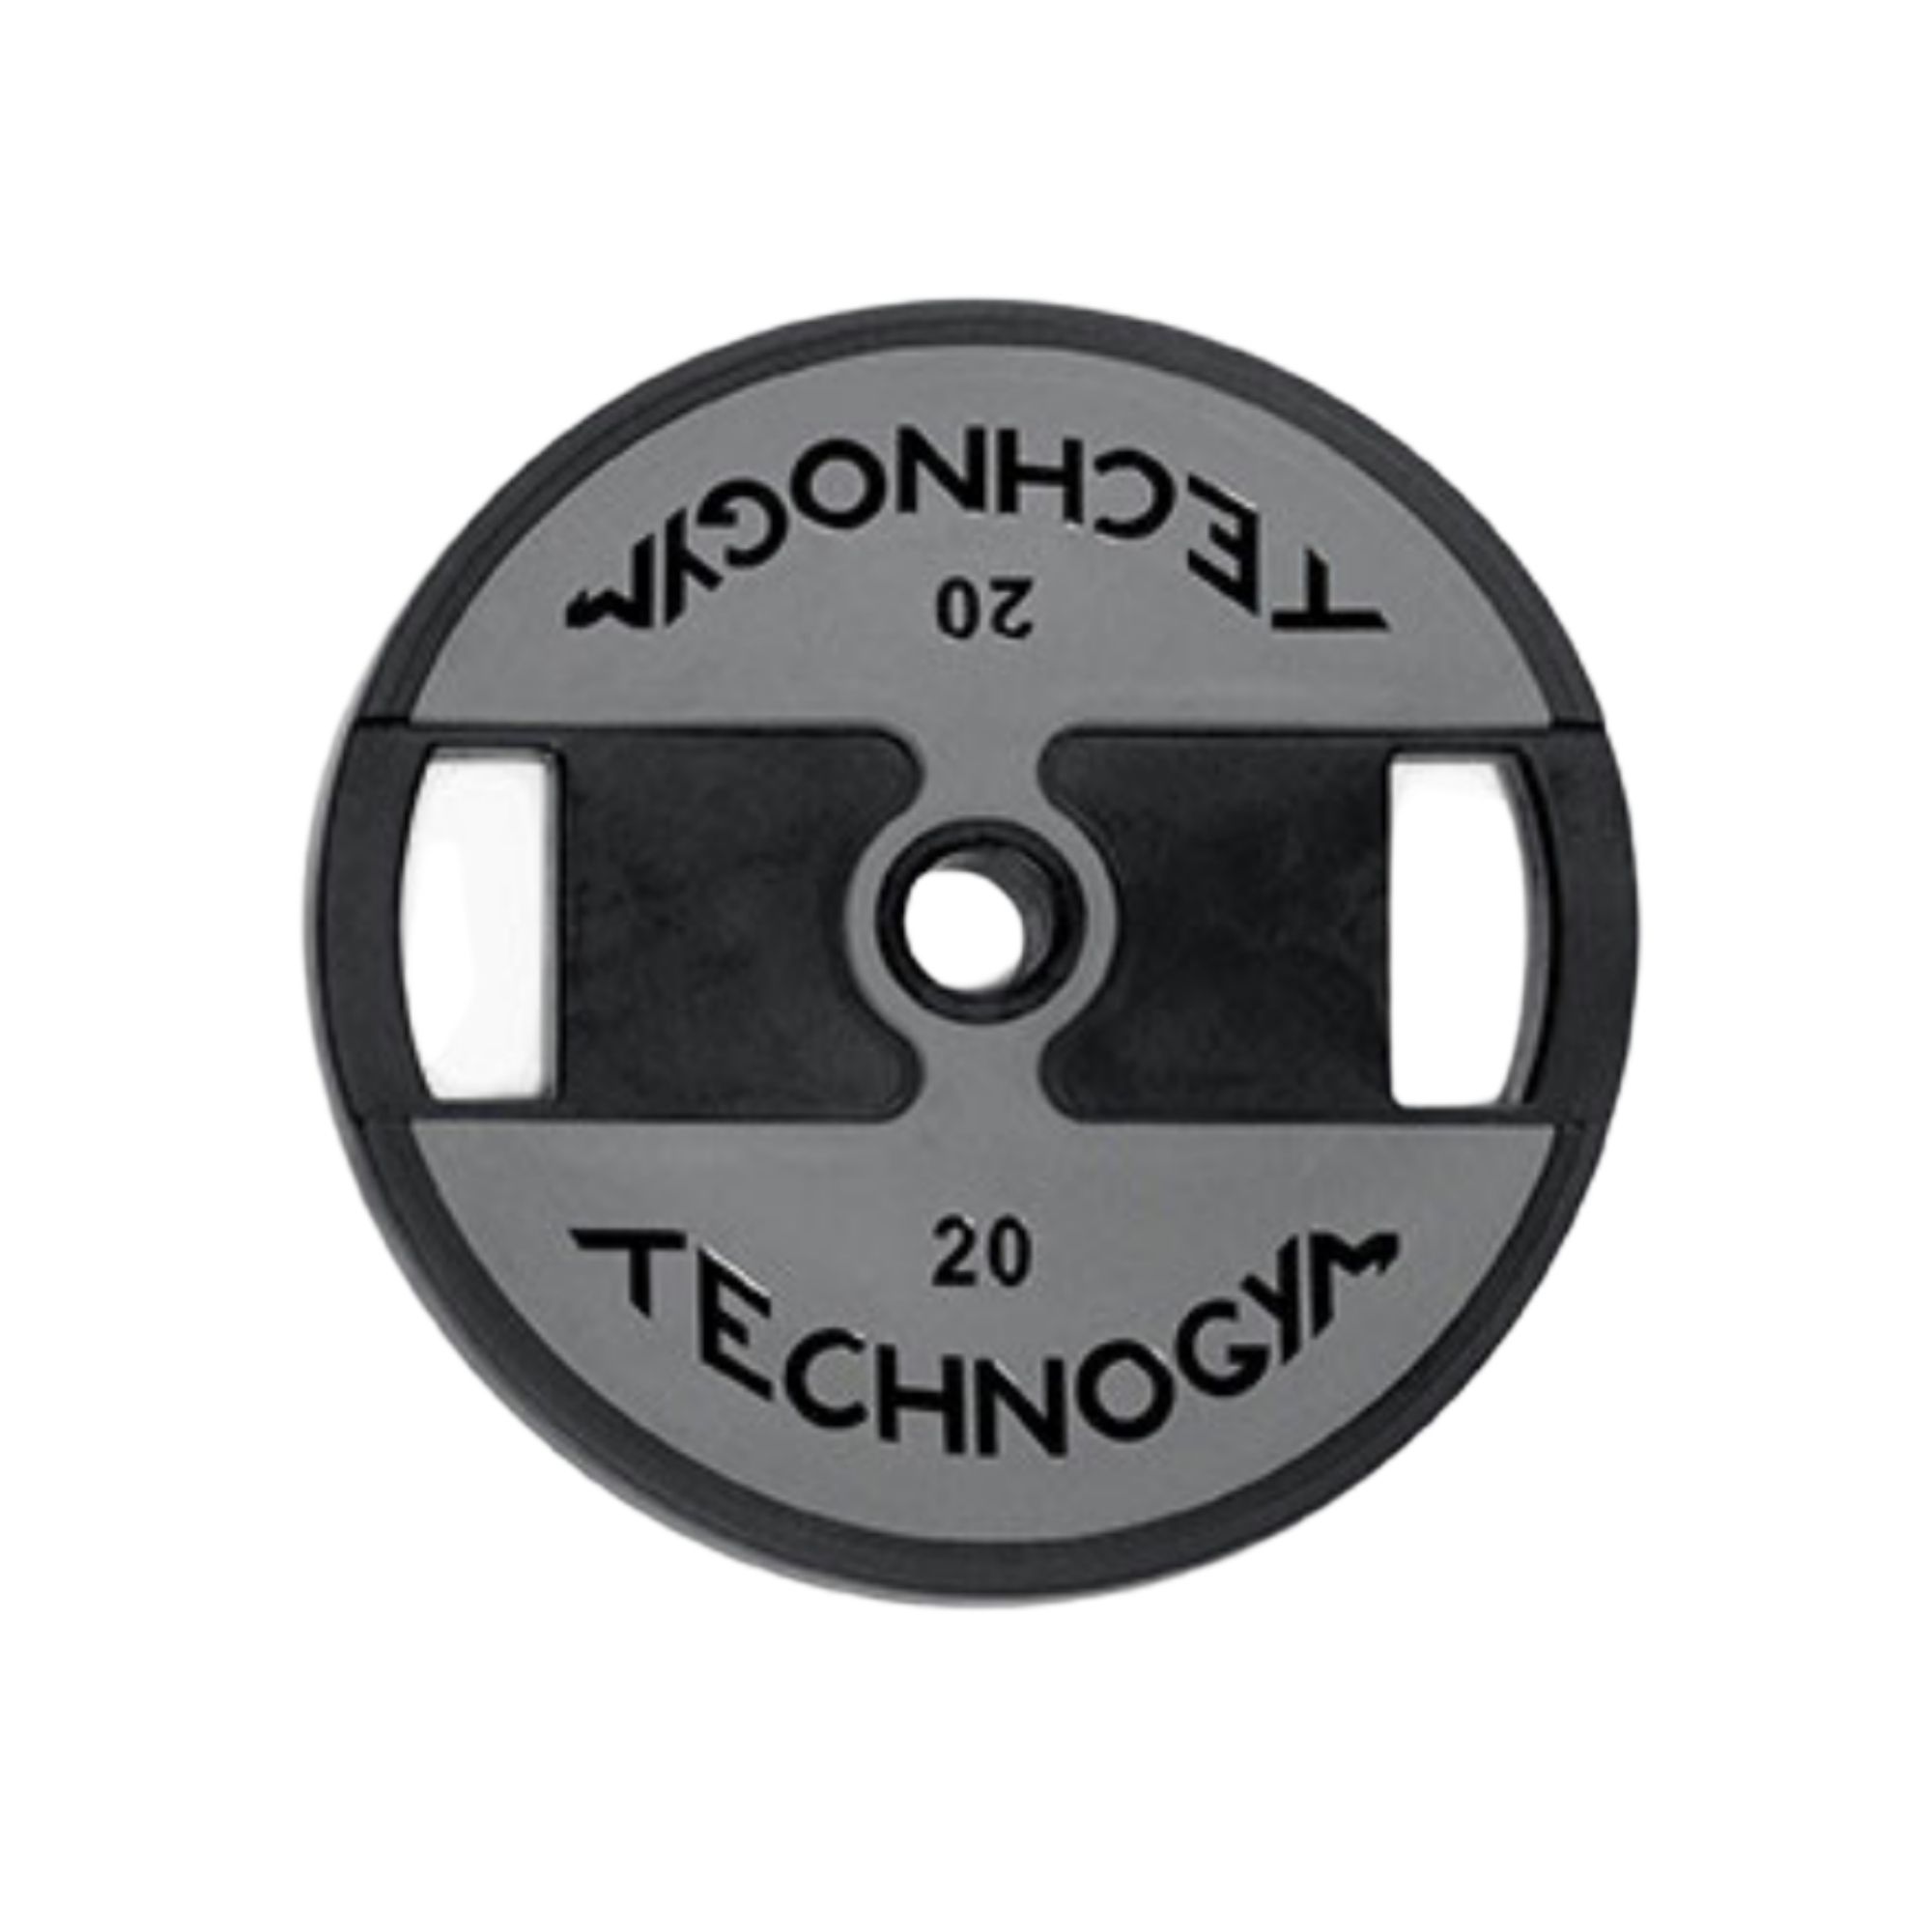 Set disques uréthane musculation 137,5 kg – TECHNOGYM – Agence Exclusive Fit